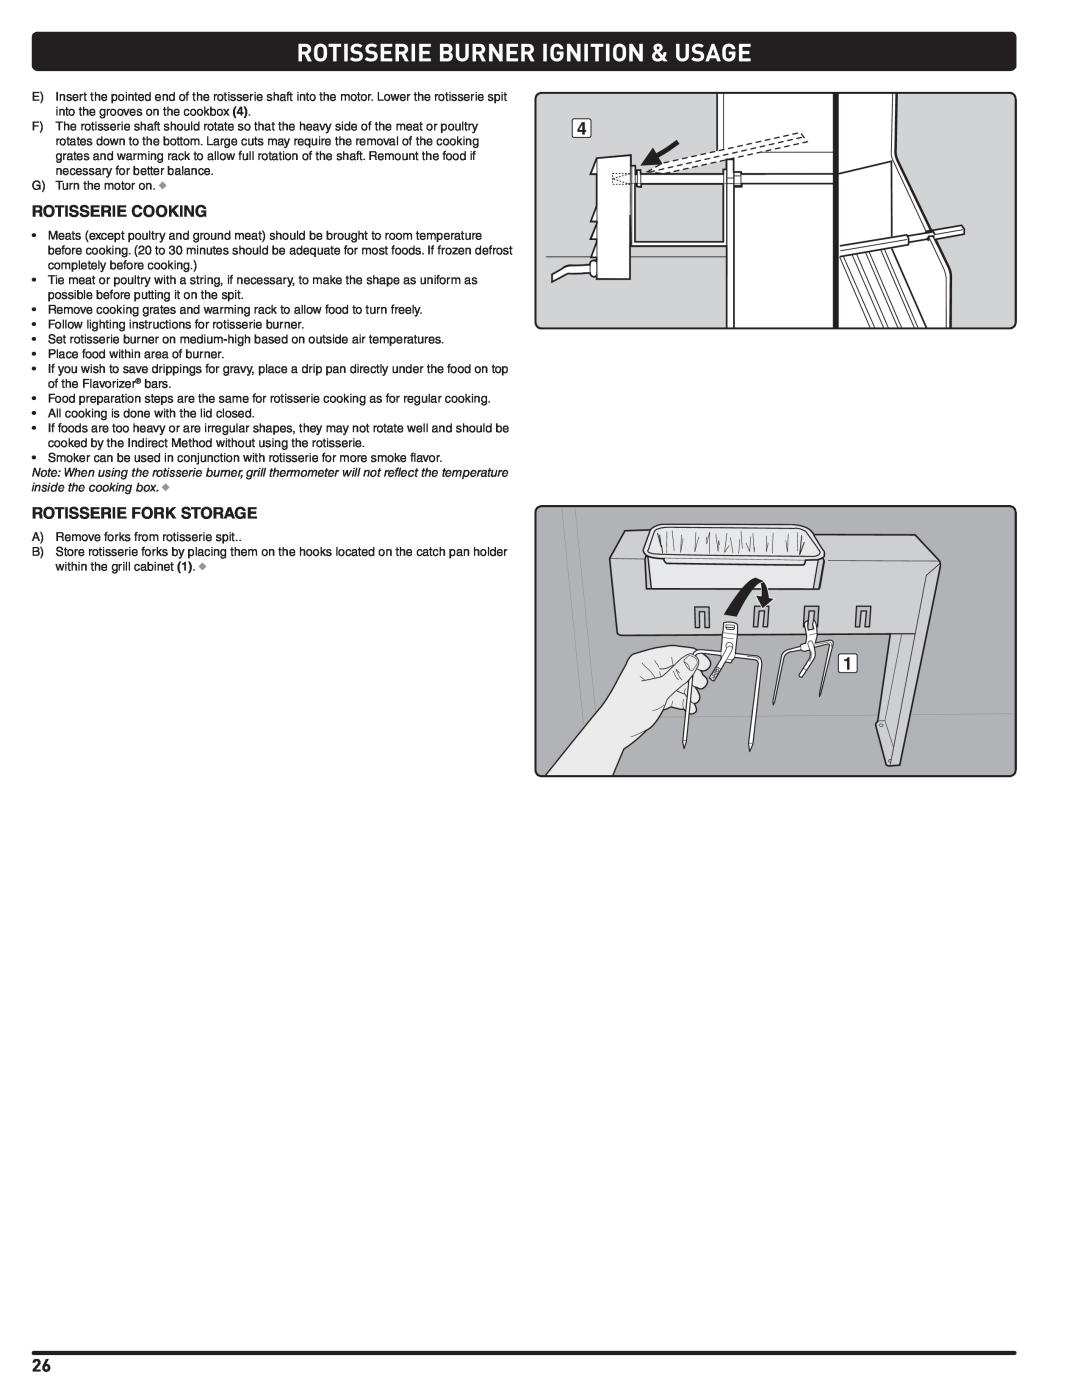 Weber 56576 manual Rotisserie Burner Ignition & Usage, Rotisserie Cooking, Rotisserie Fork Storage 